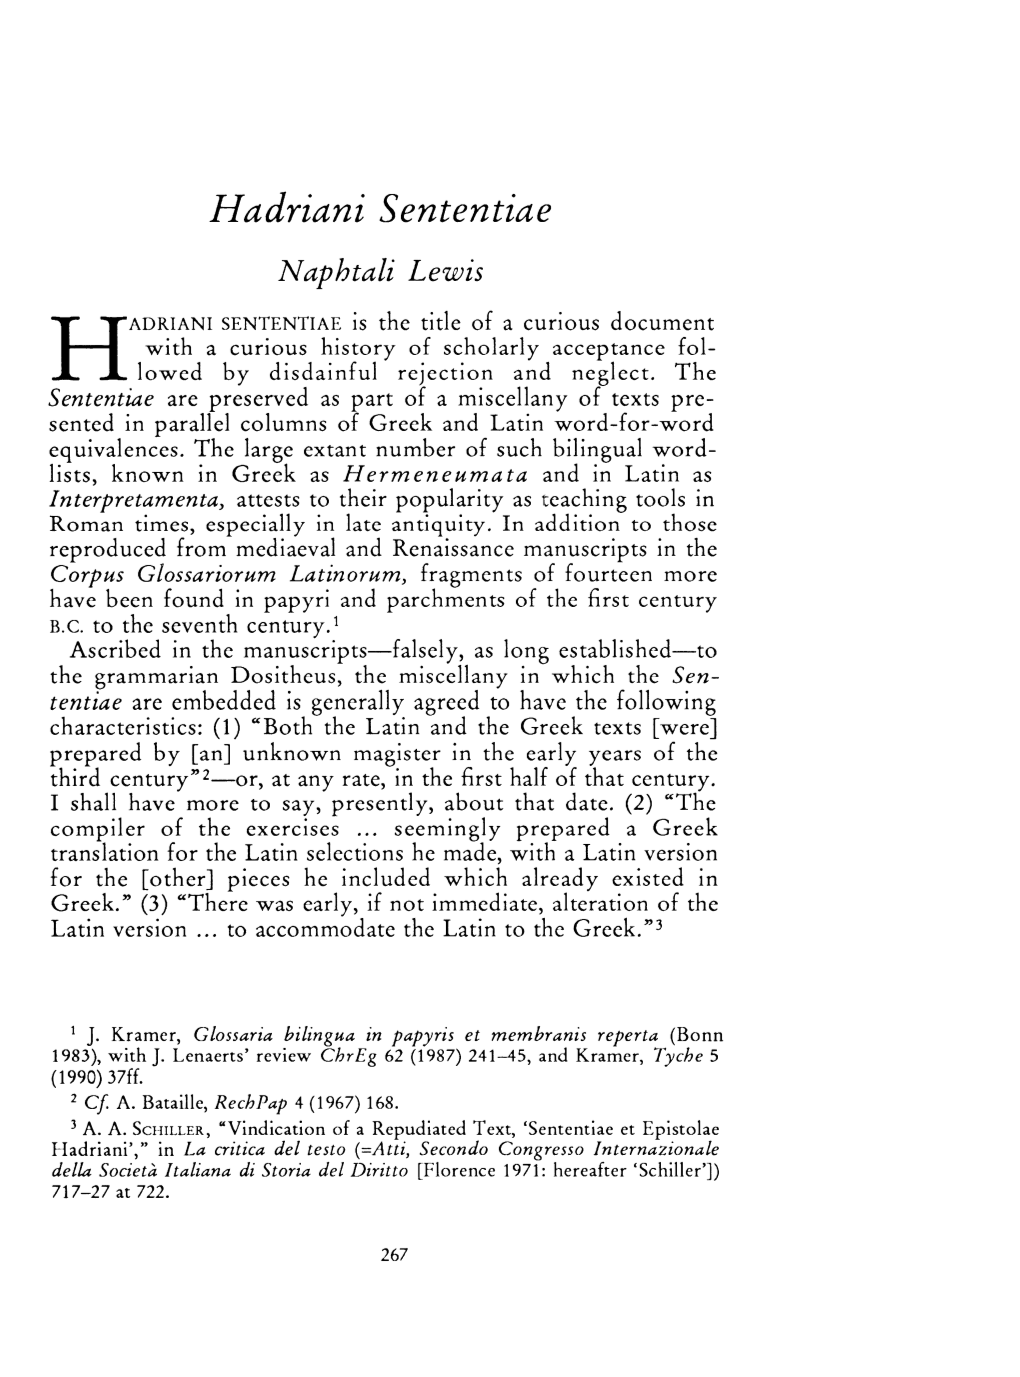 Hadriani Sententiae , Greek, Roman and Byzantine Studies, 32:3 (1991:Autumn) P.267